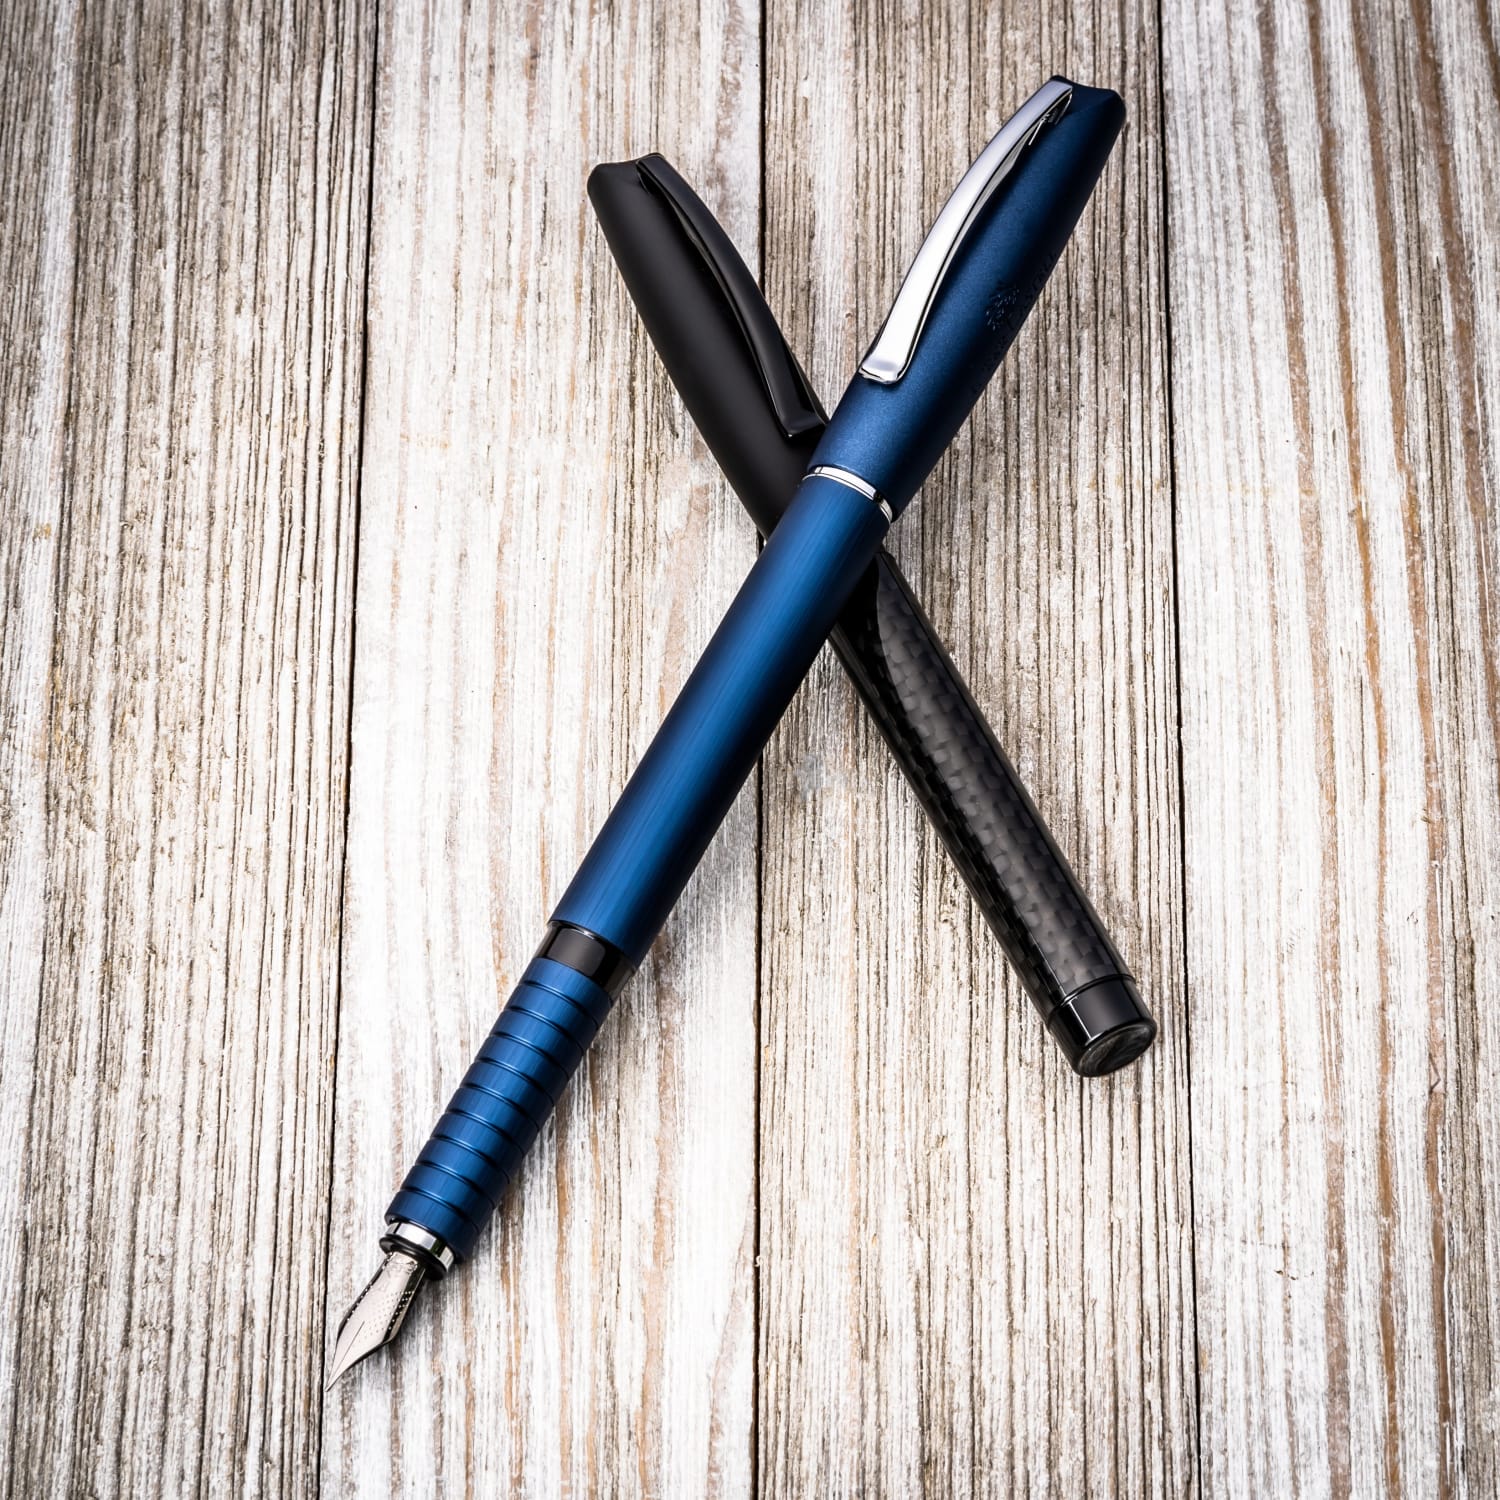 Faber-Castell Essentio Aluminum Blue Pen - Desires by Mikolay